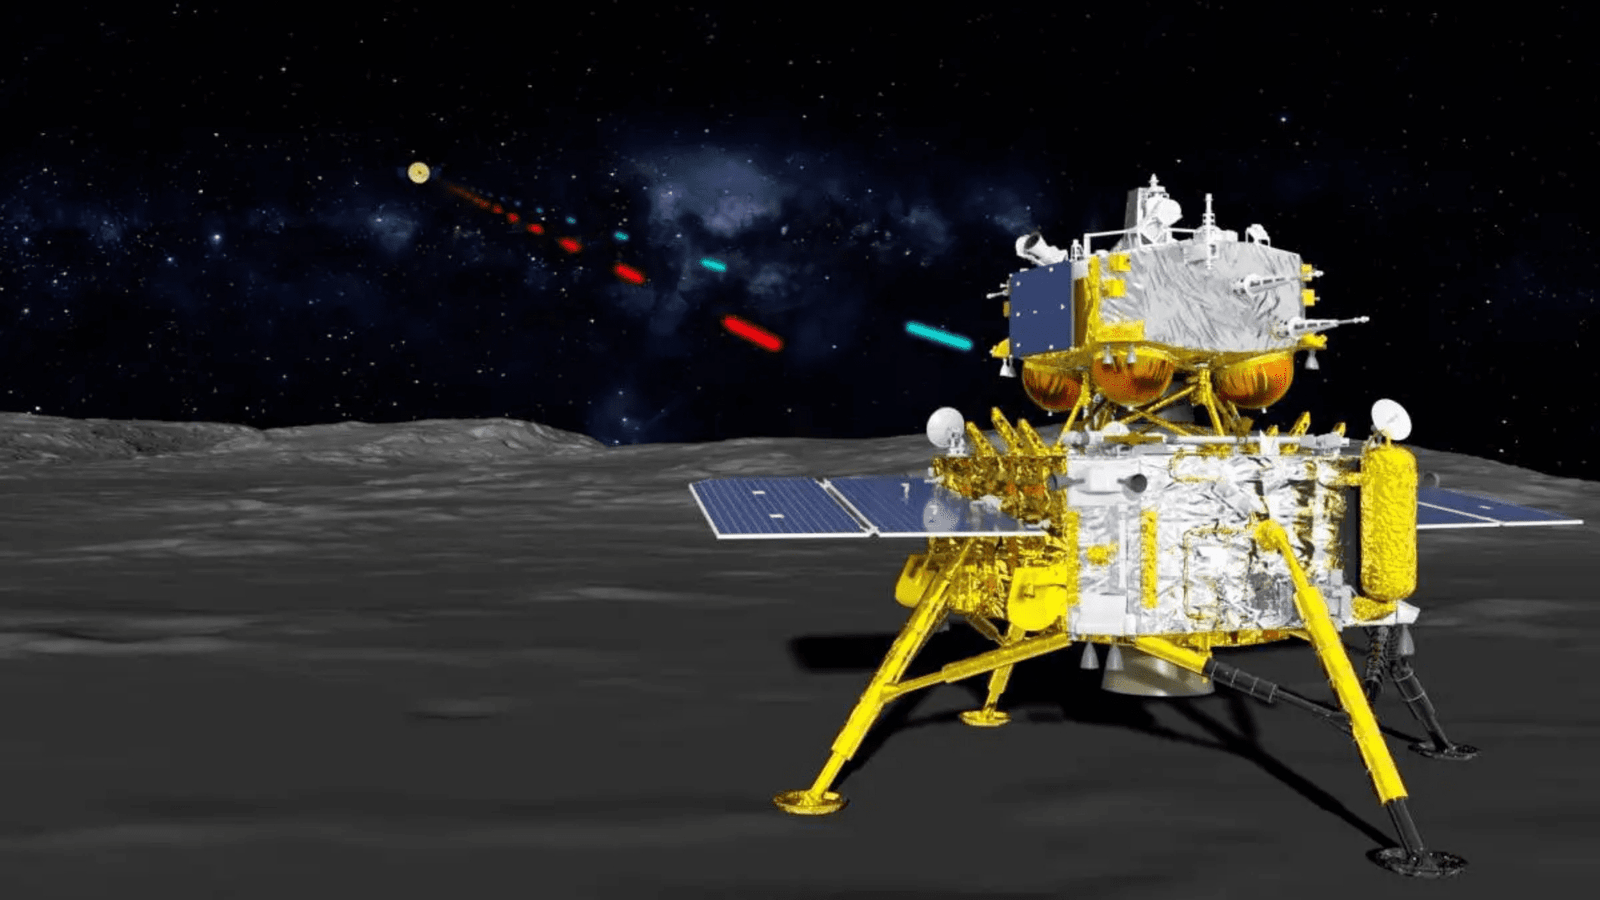 Pakistan’s first lunar satellite enters moon’s orbit